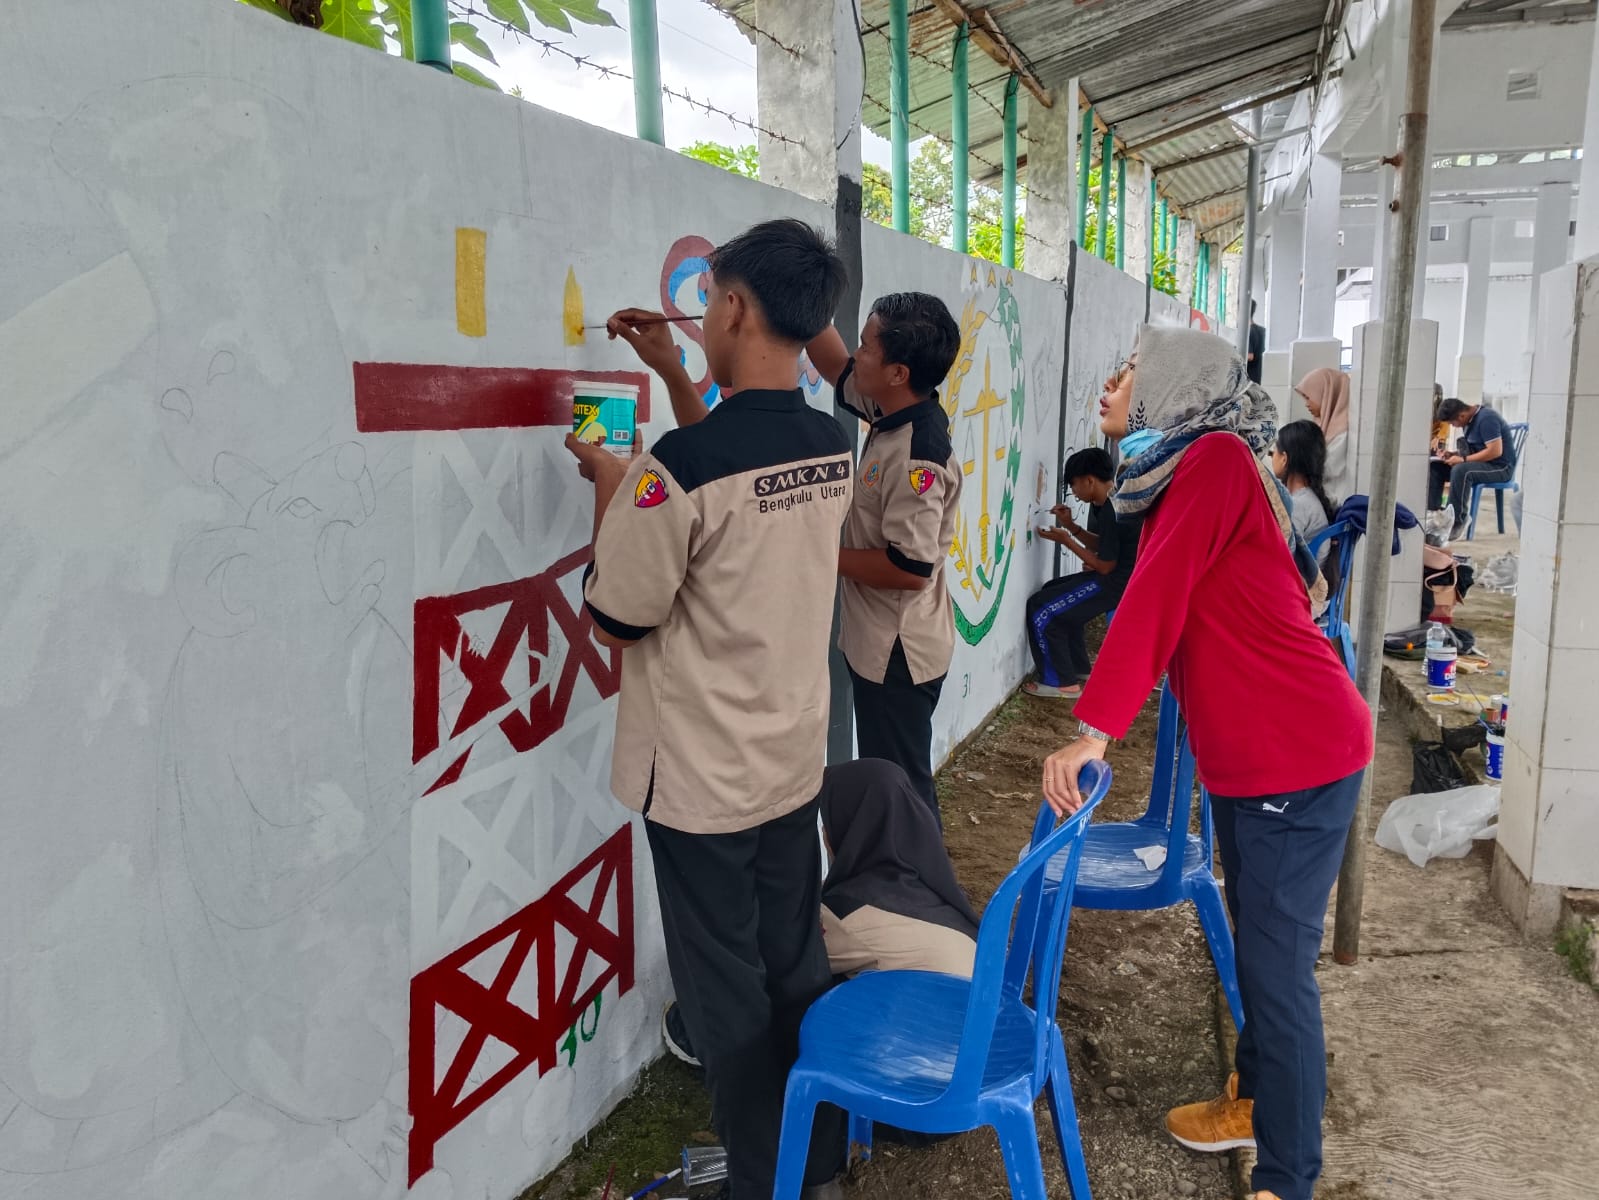 Tembok Kejaksaan Negeri Bengkulu Utara 'Dicoret-coret' Pelajar